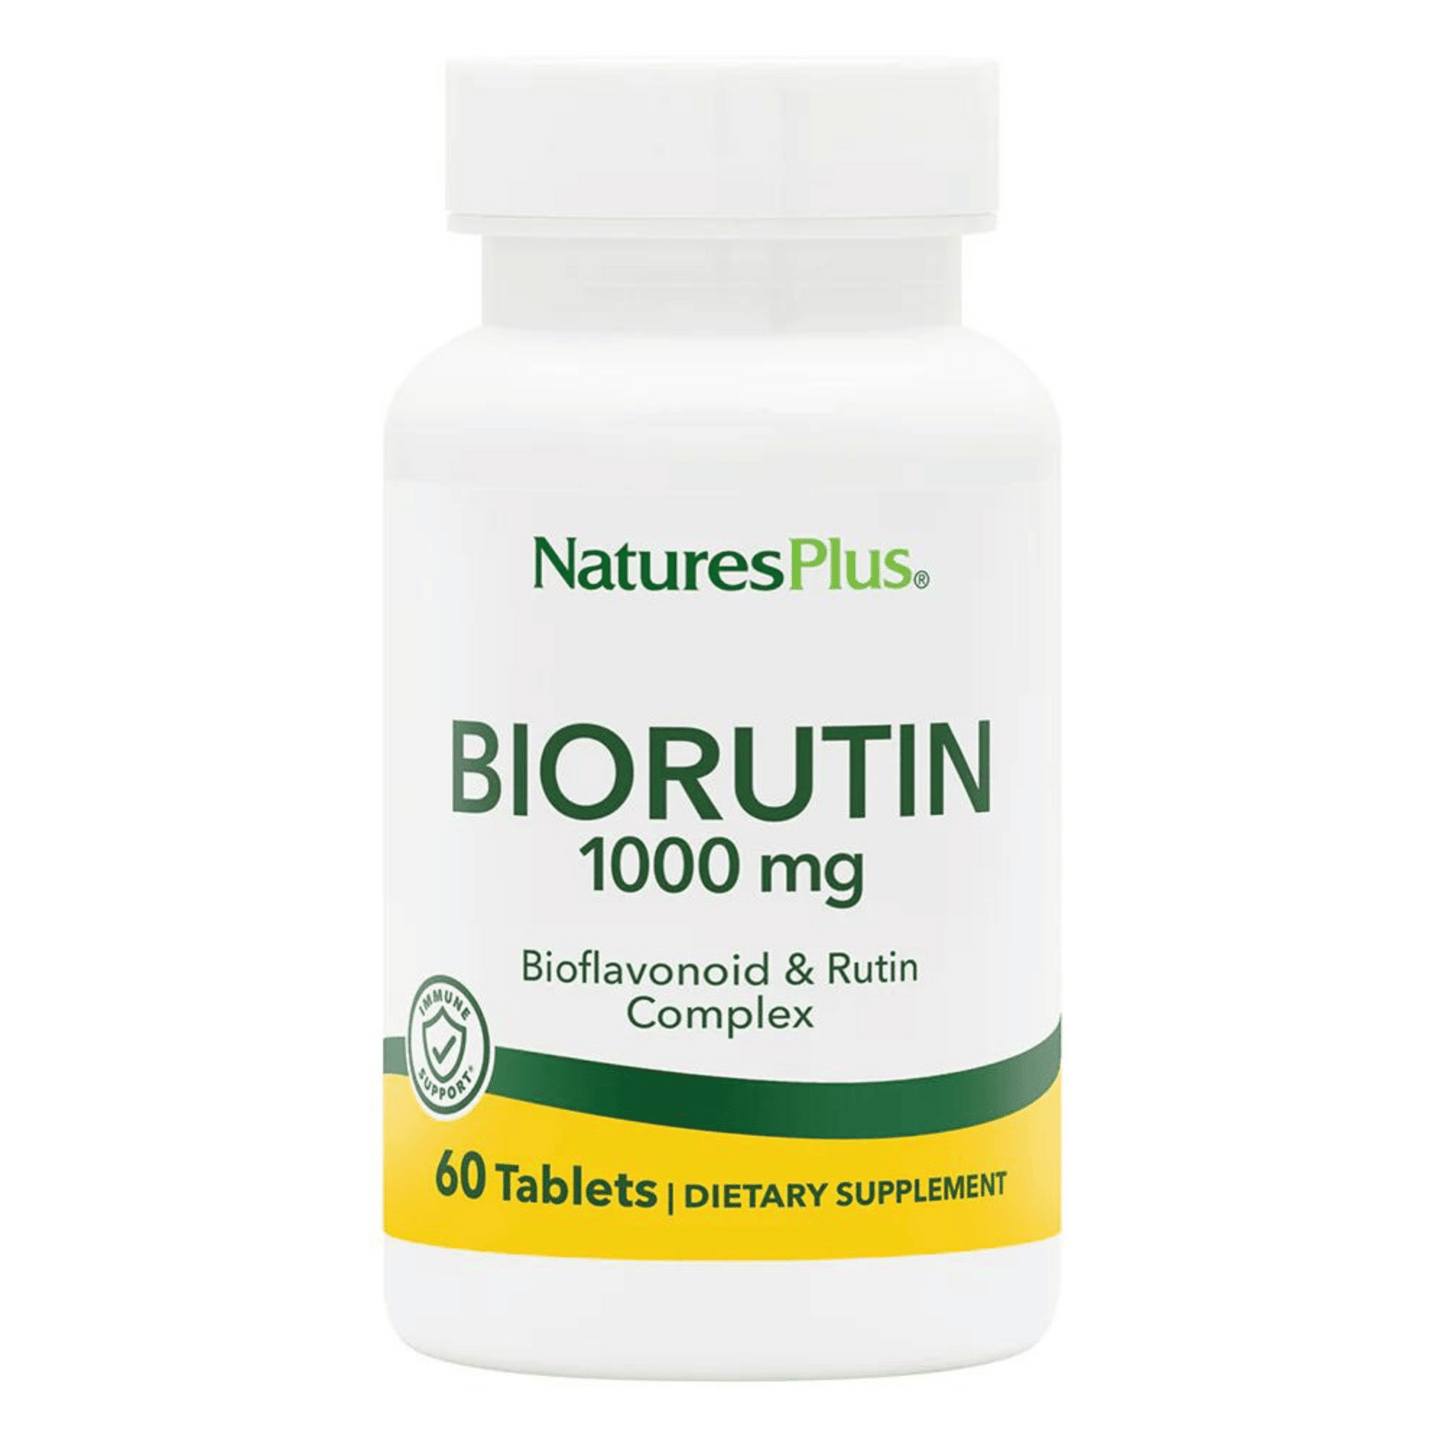 Primary Image of Biorutin 1000mg